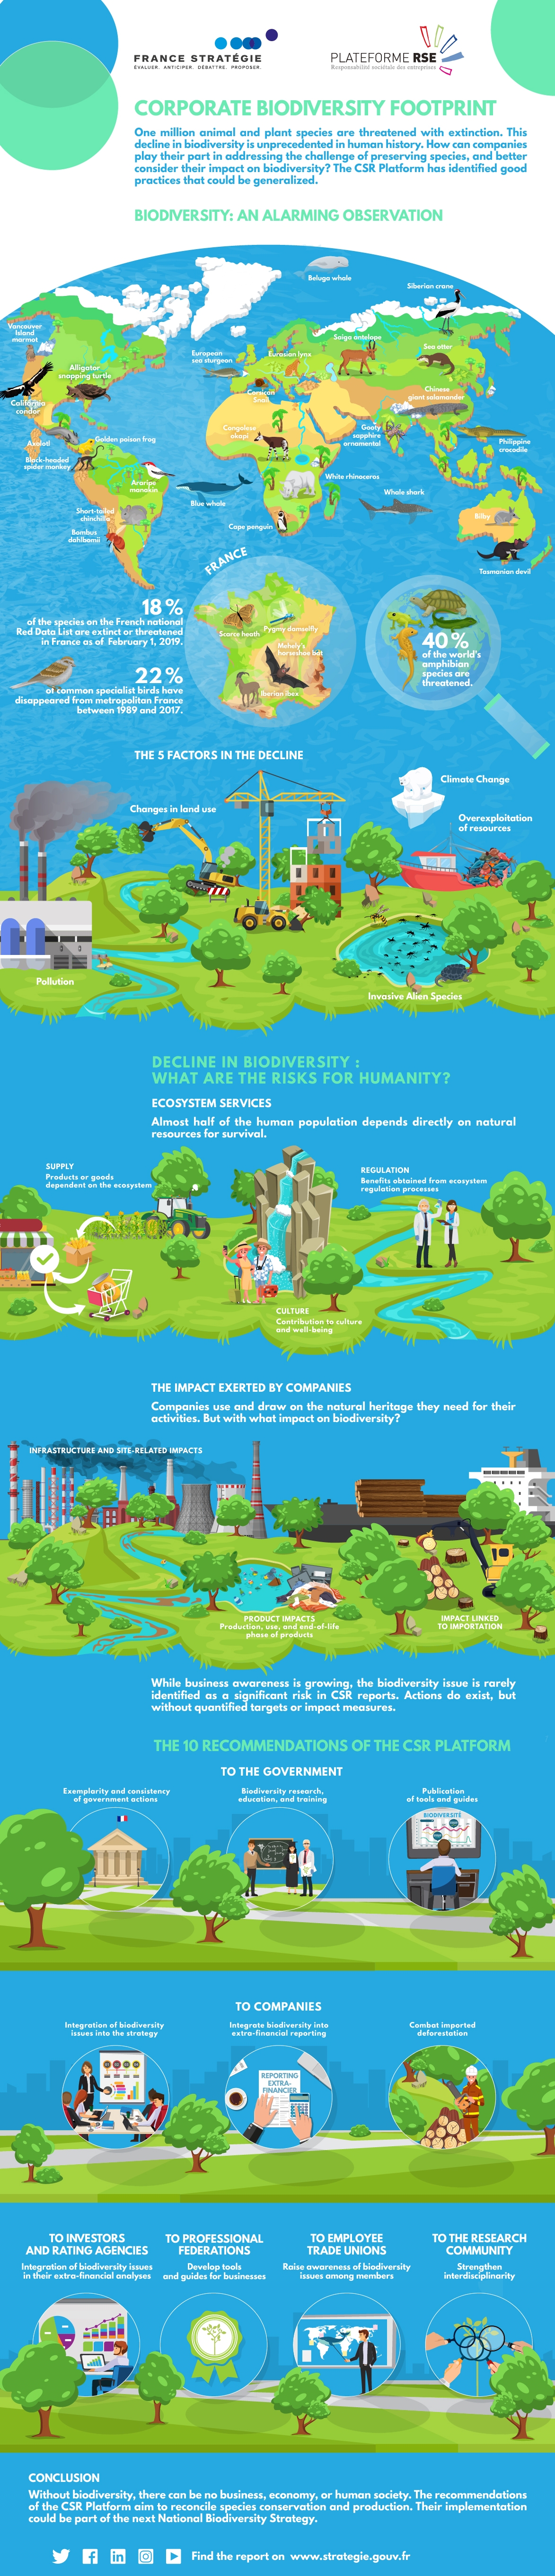 Corporate biodiversity footprint